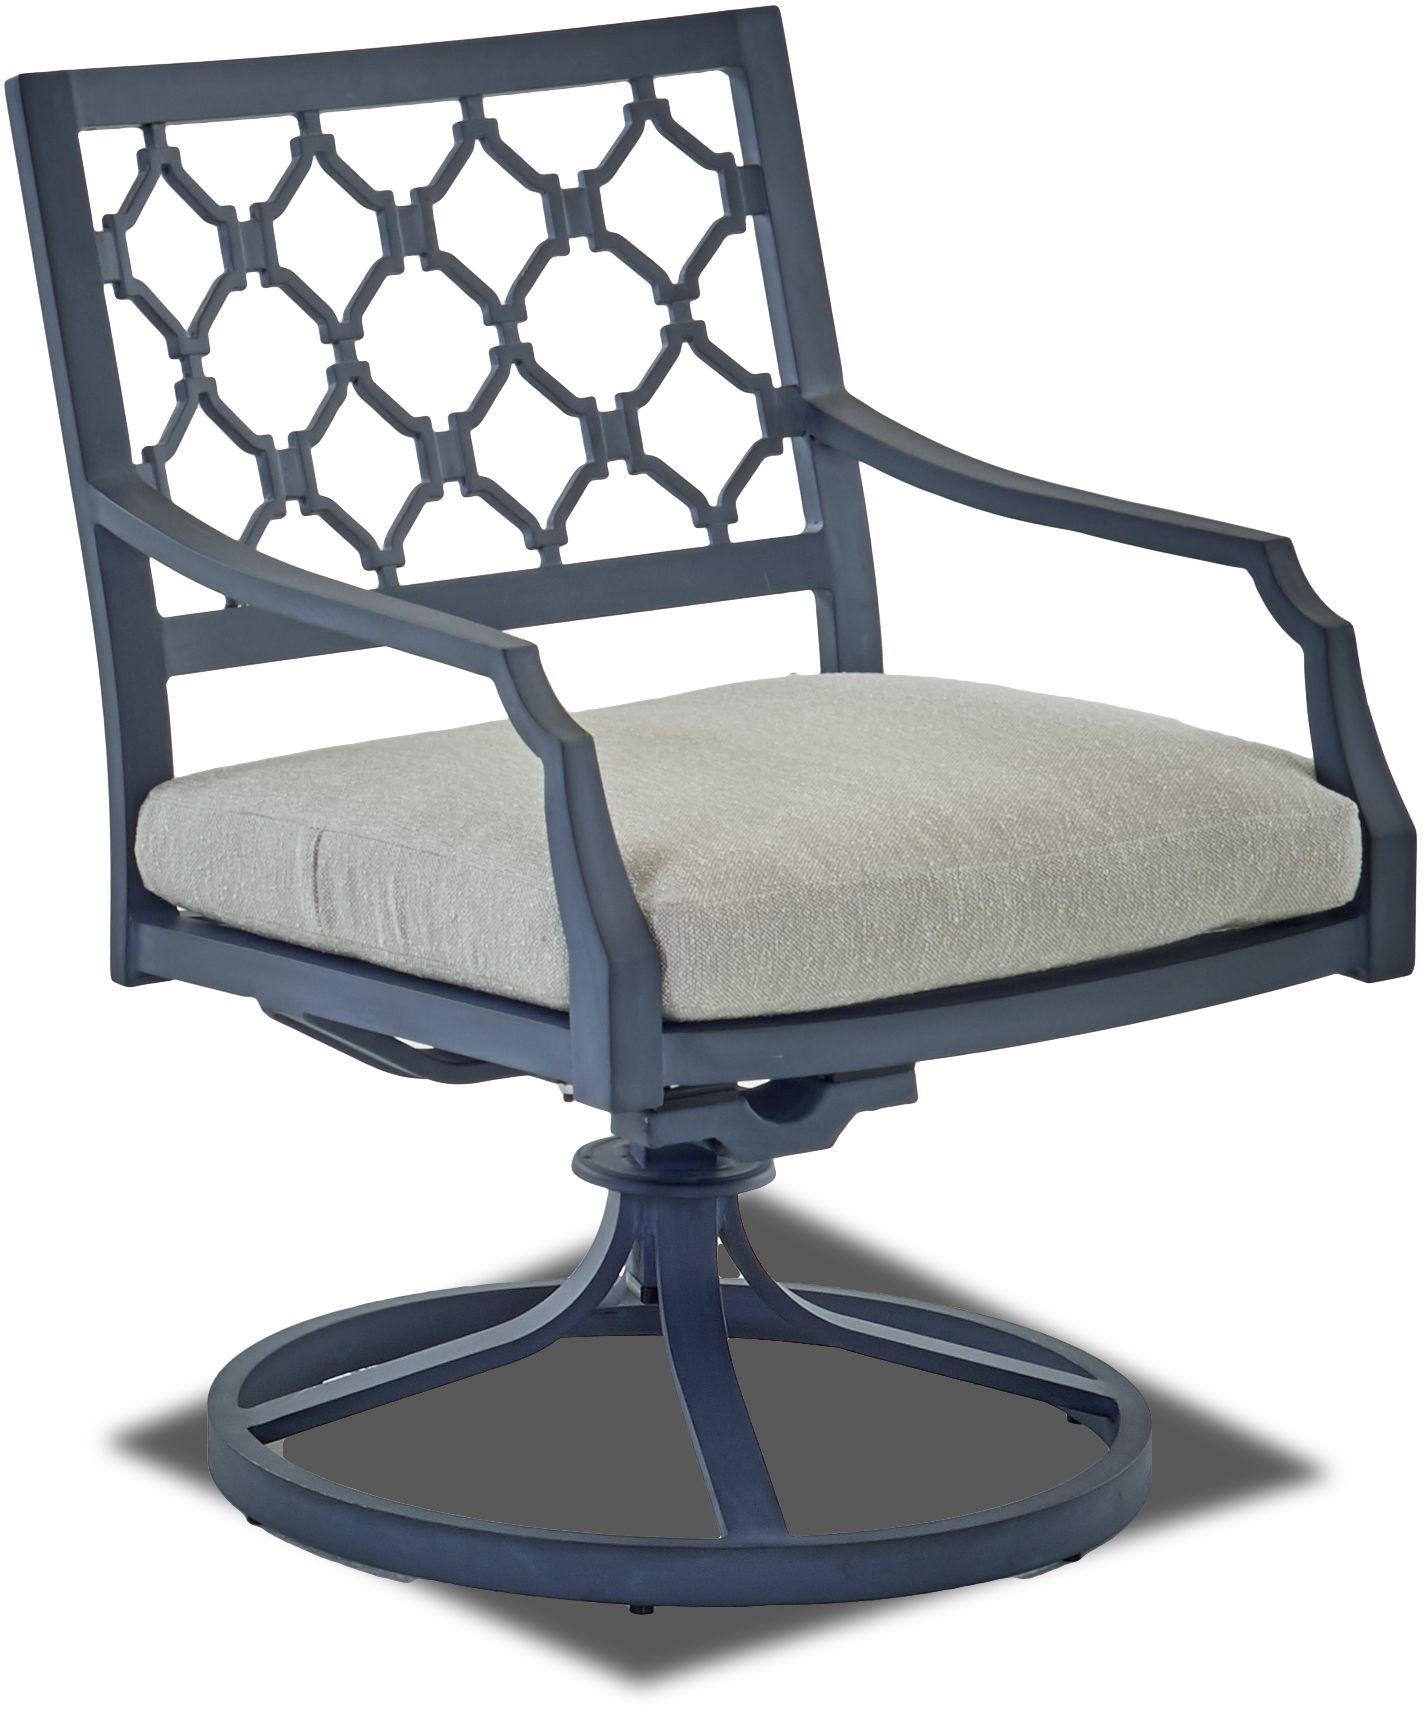 Klaussner® Outdoor Mirage Swivel Rock Dining Chair